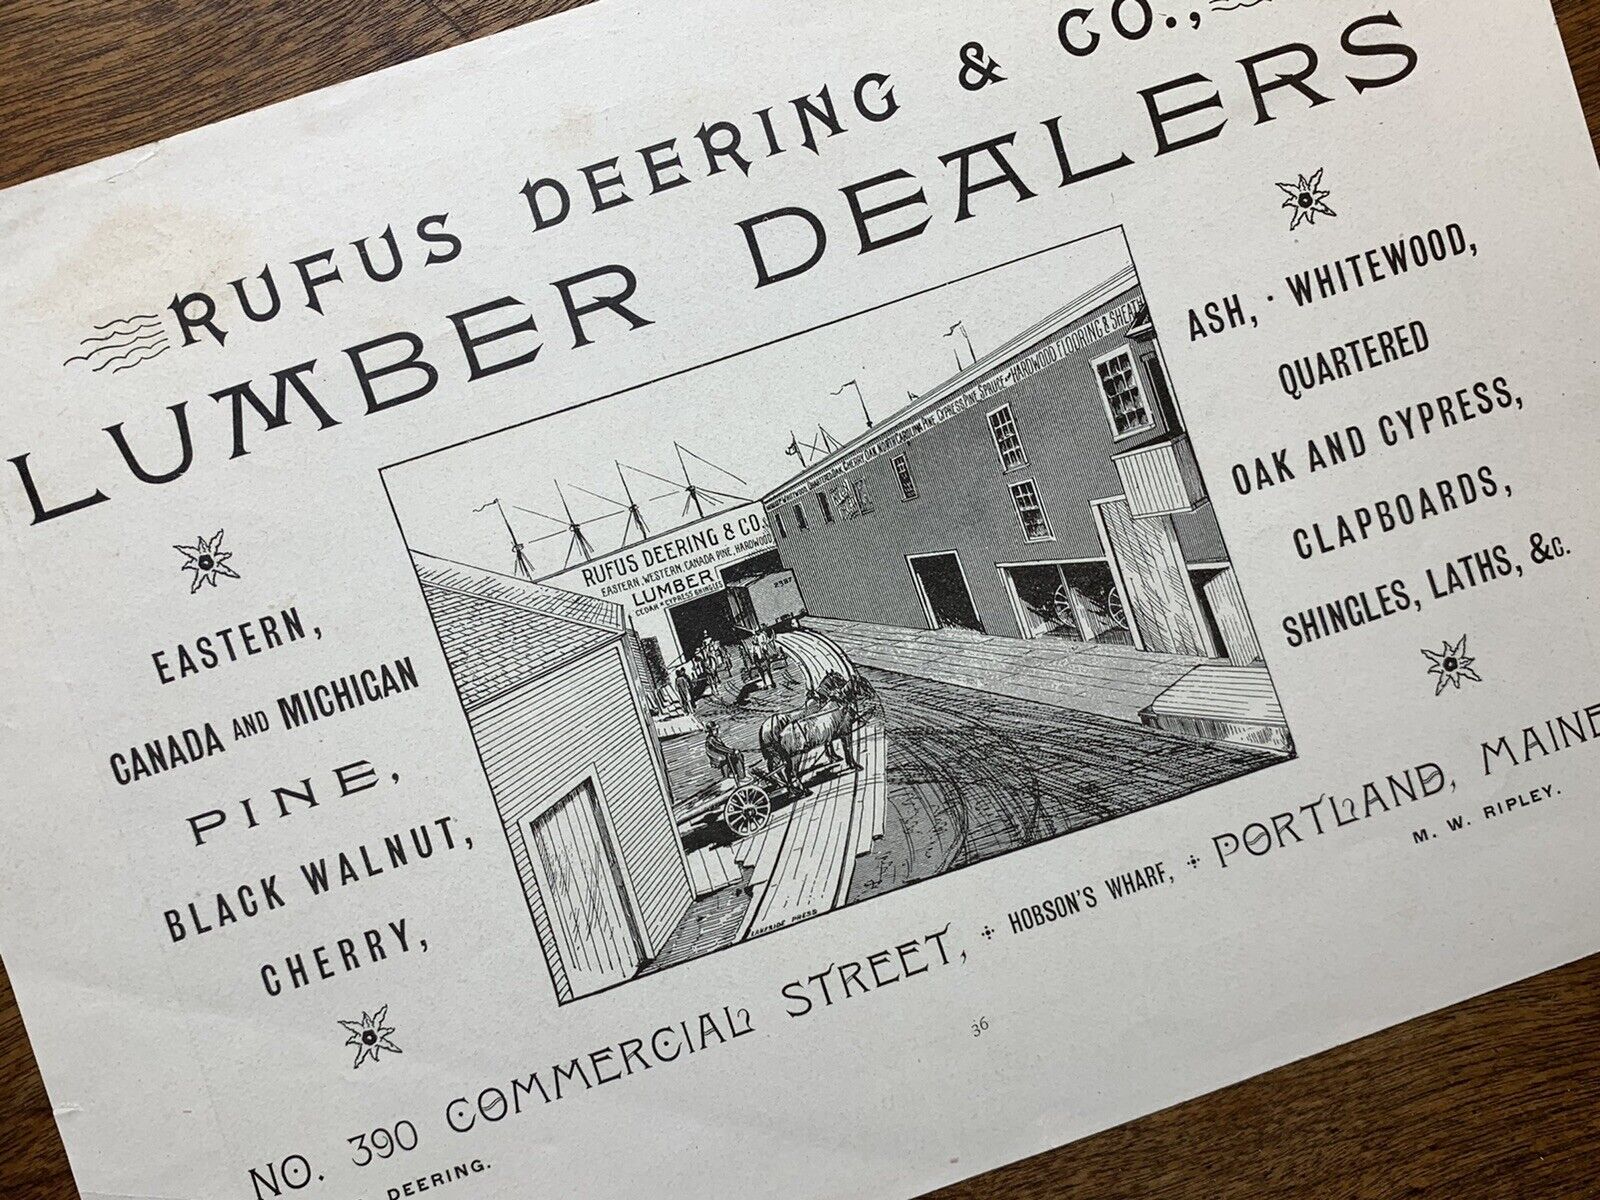 Rufus Deering Co. Lumber Portland Maine Antique Advertisement Hobson Wharf